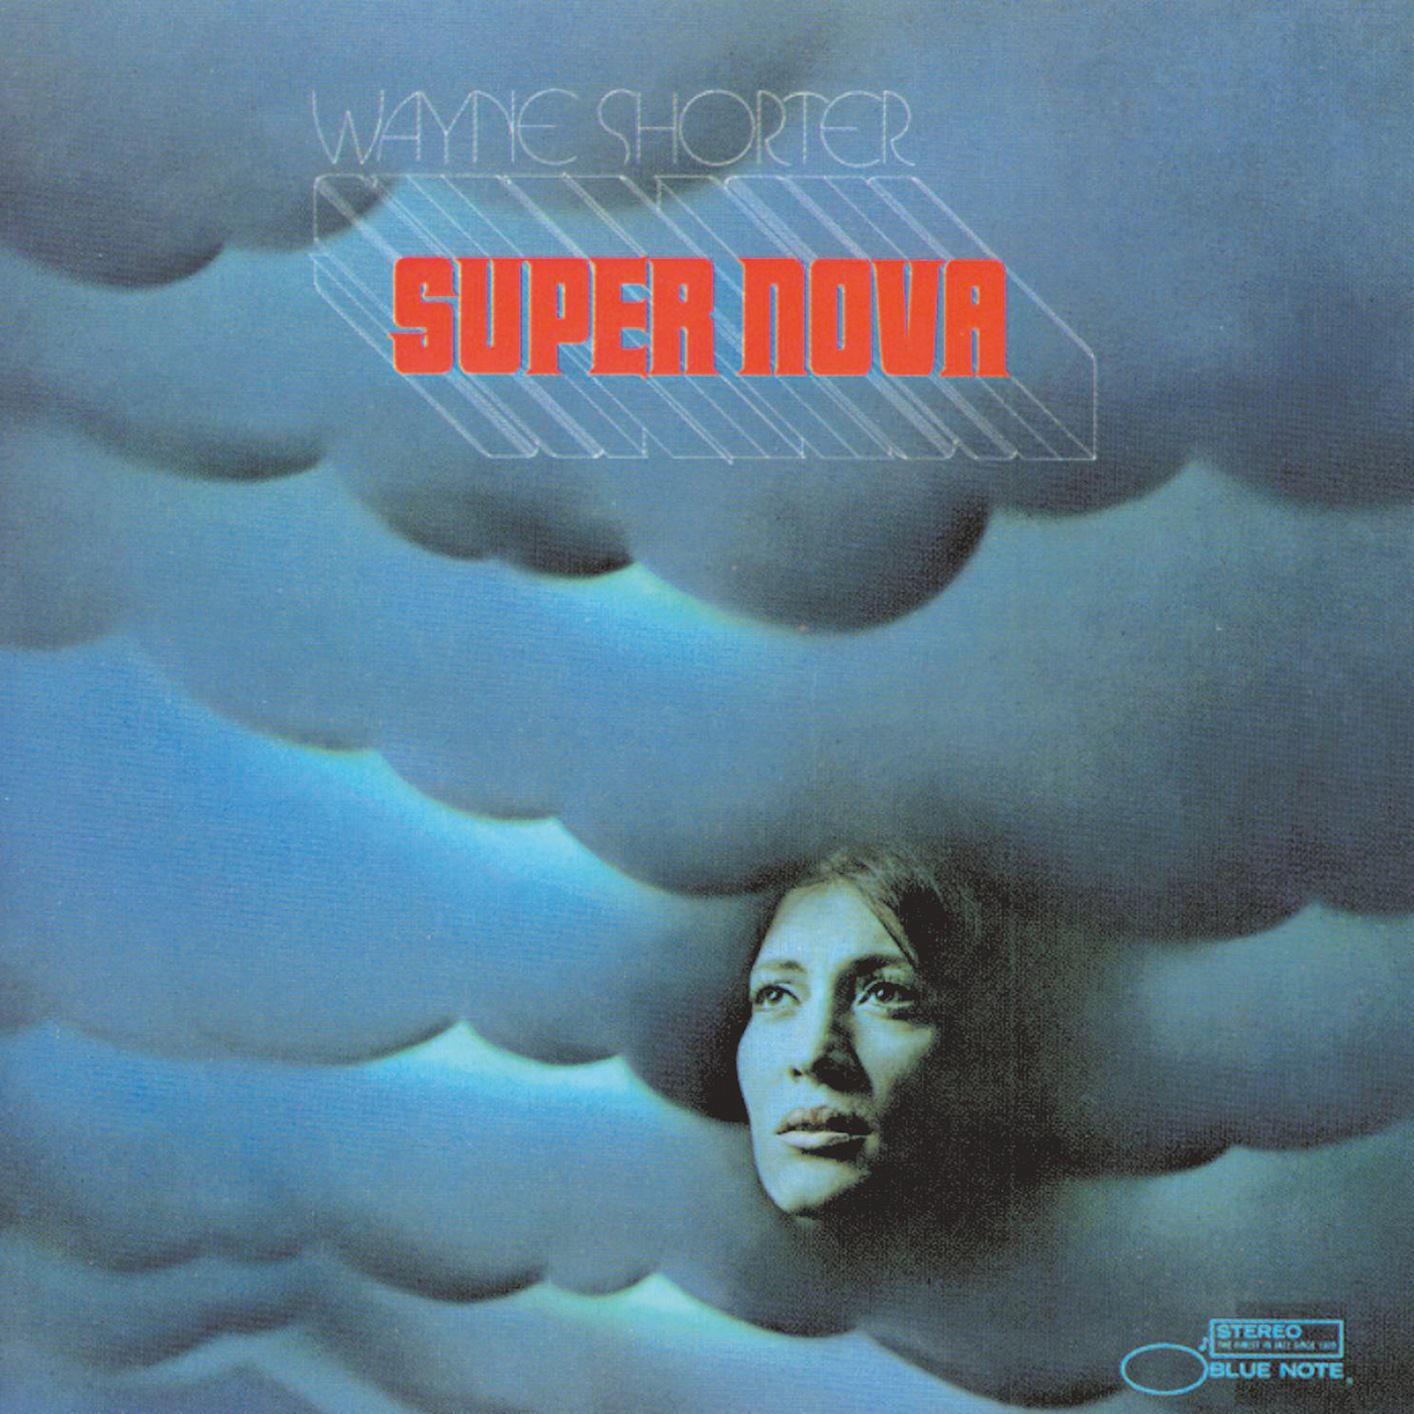 Wayne Shorter - Super Nova (1969/2014) [Qobuz FLAC 24bit/192kHz]